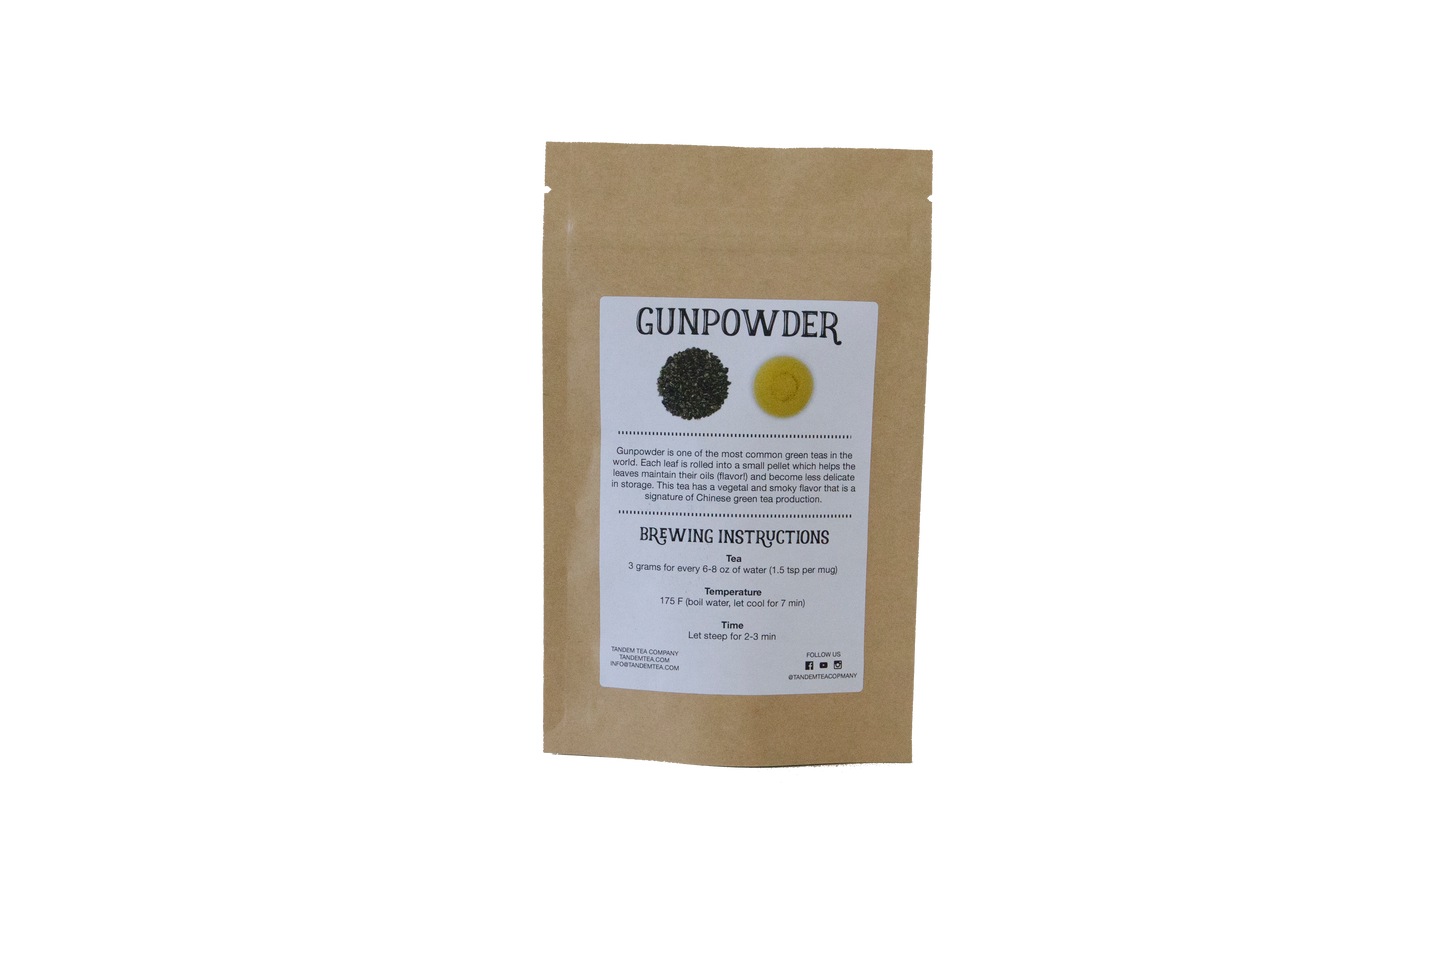 Gunpowder - Organic Loose Leaf Green Tea from China